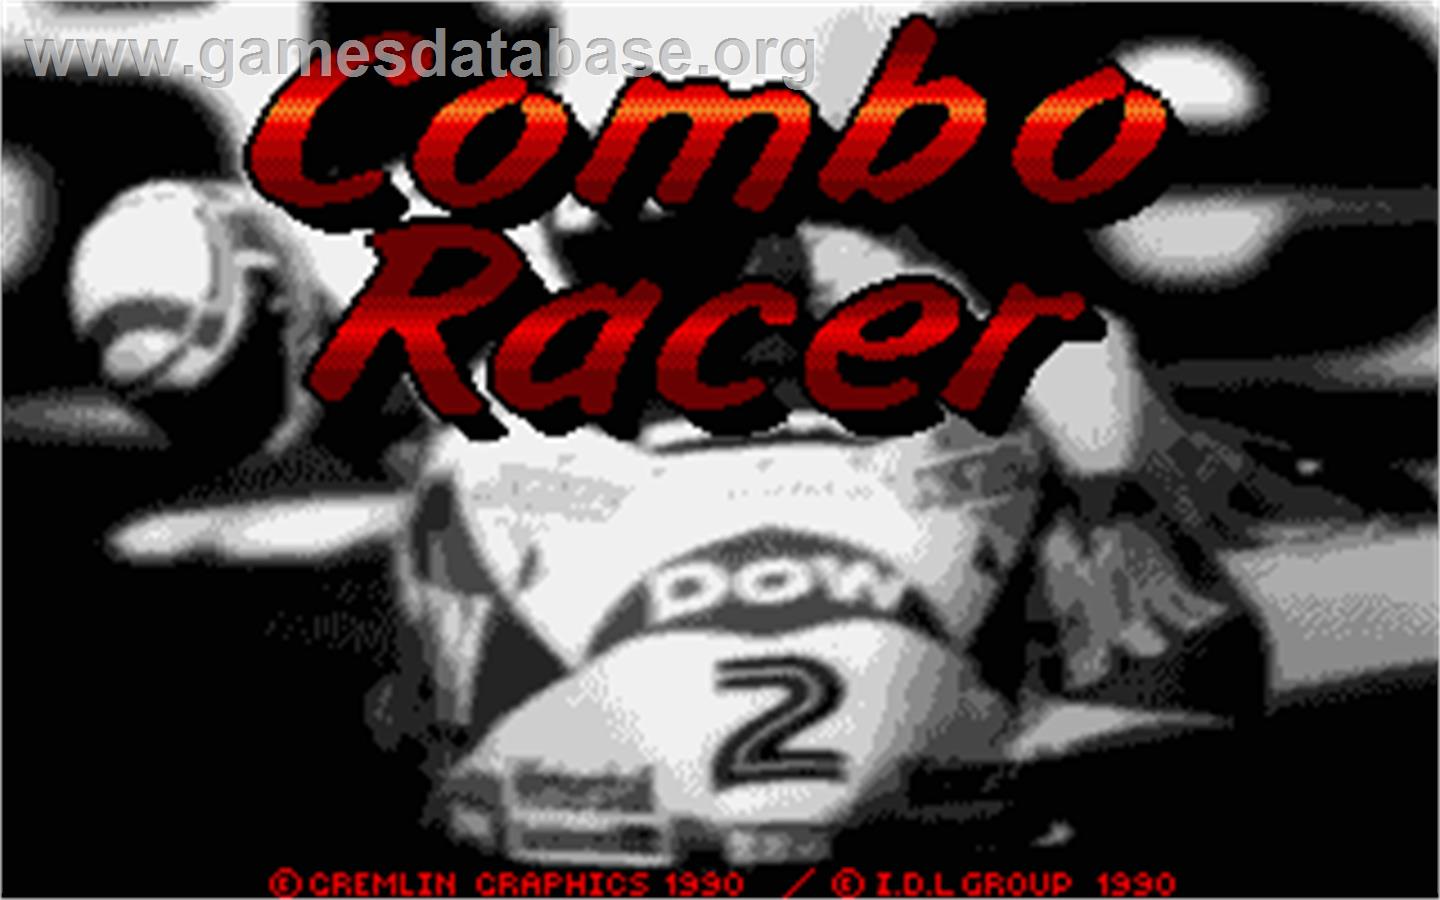 Combo Racer - Atari ST - Artwork - Title Screen